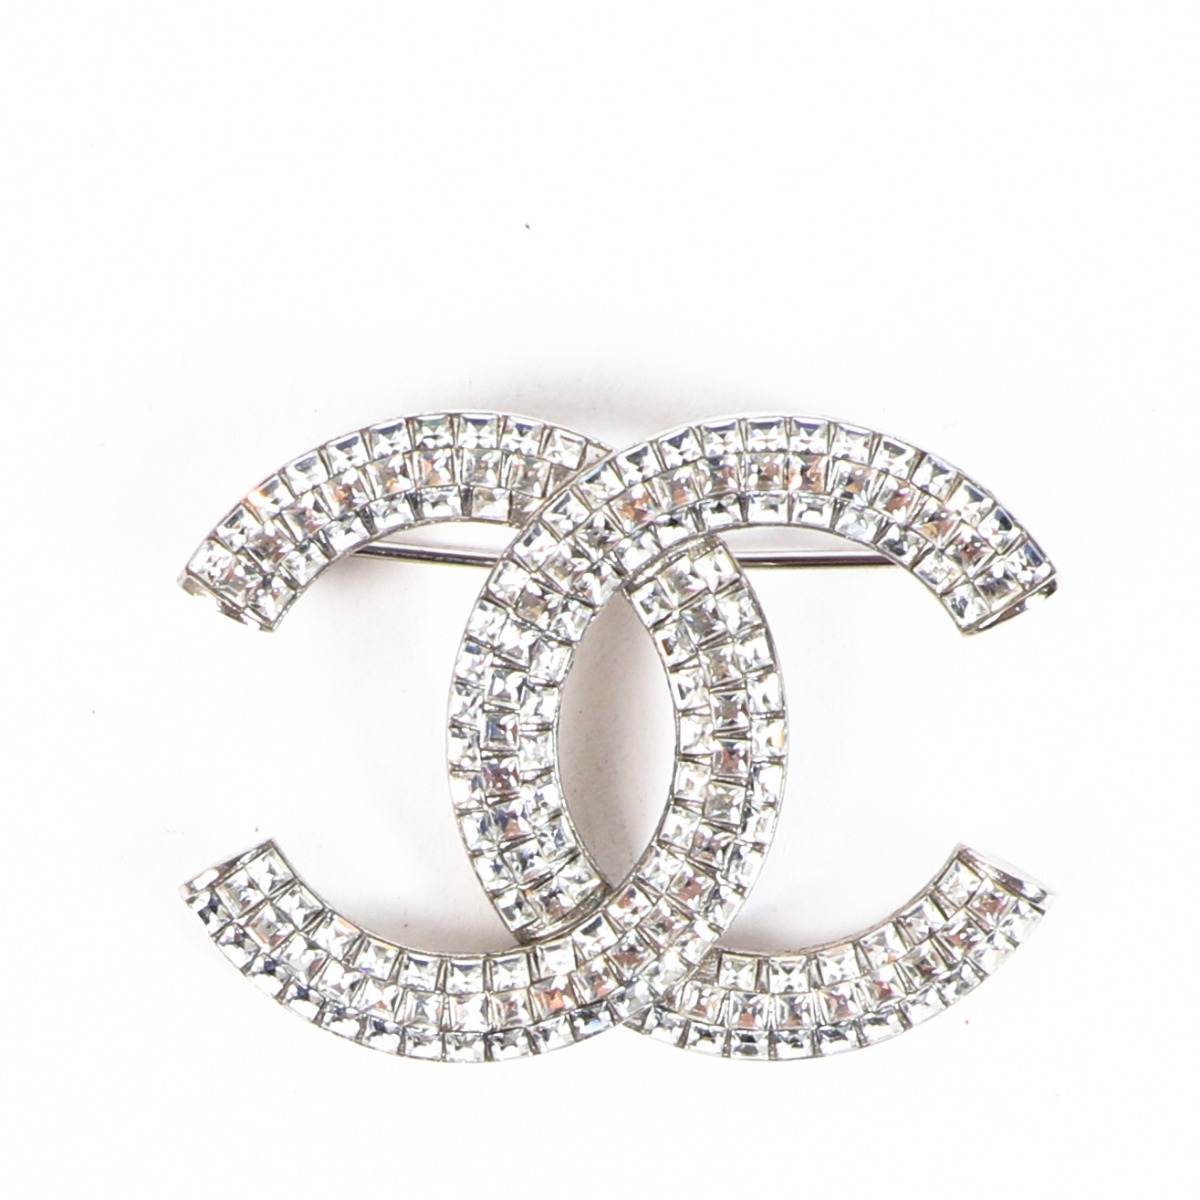 NWT! ✨ RARE! Beautiful REV CHANEL CC Logo Signature Silver w/ Crystal Brooch